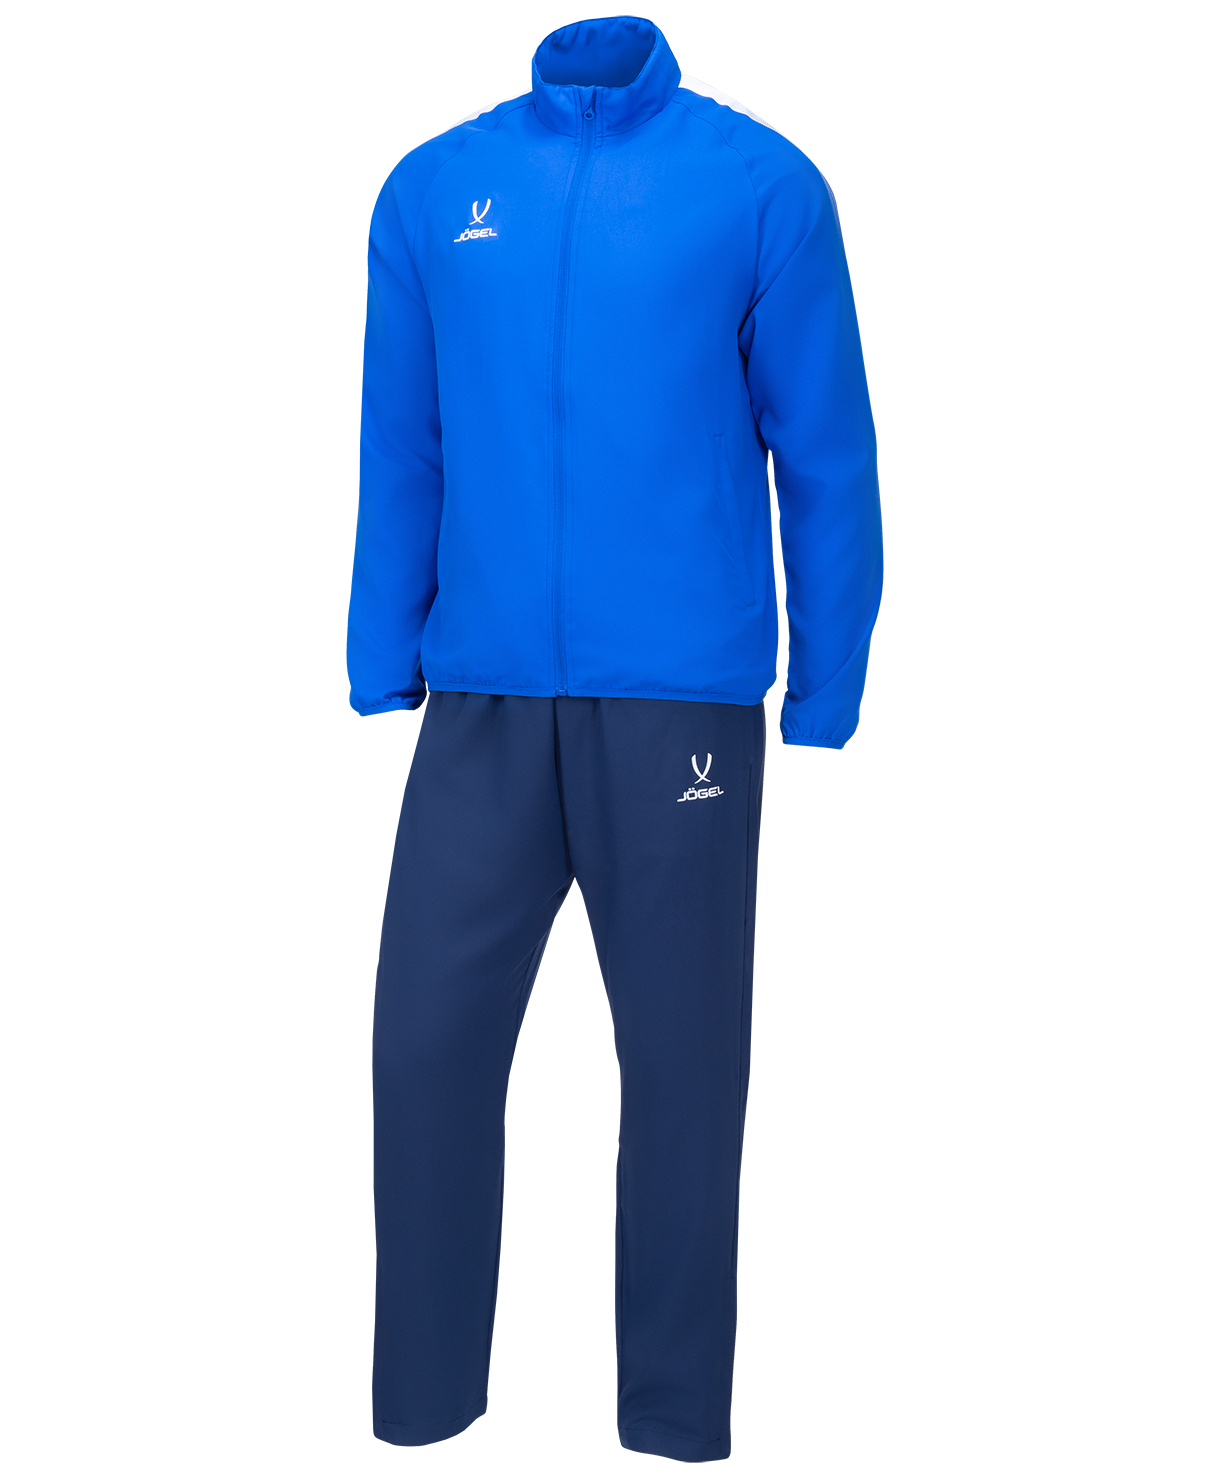 Jogel купить форму. Костюм спортивный Jögel Camp lined Suit. Спортивный костюм Jogel. Костюм спортивный Camp lined Suit, синий/темно-синий/белый Jögel. Костюм Jogel синий.